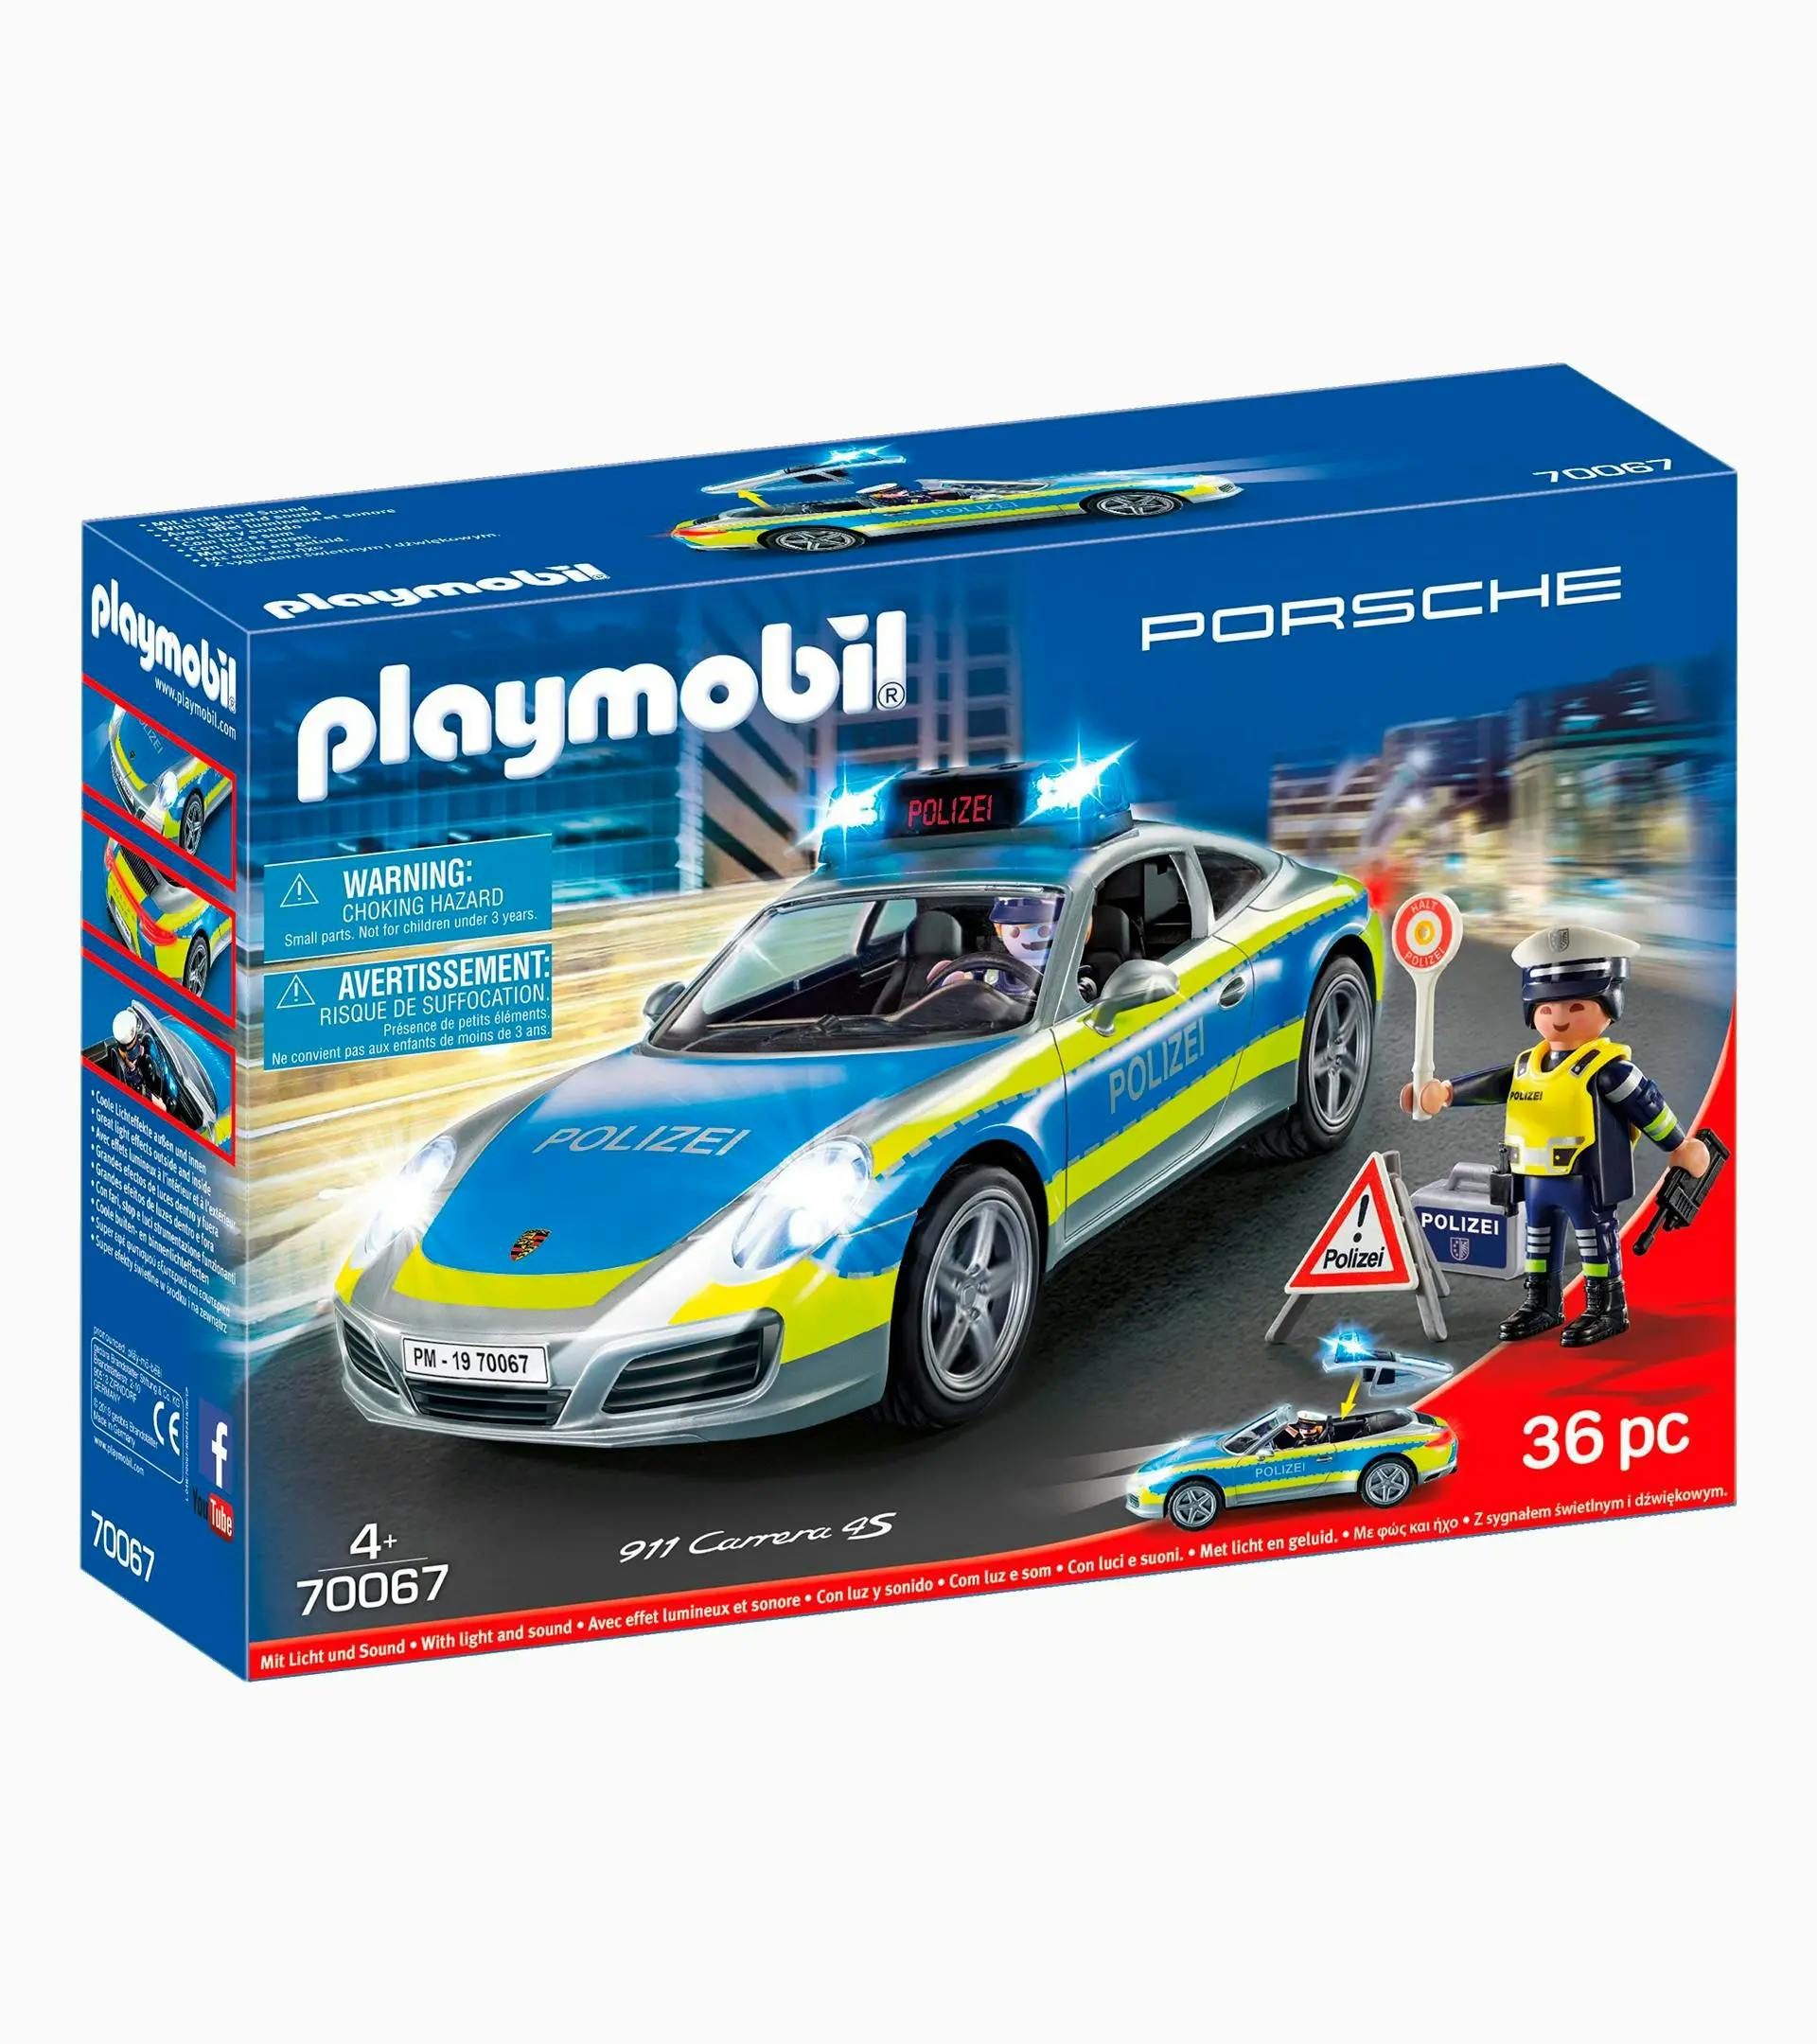 PLAYMOBIL playset police | PORSCHE